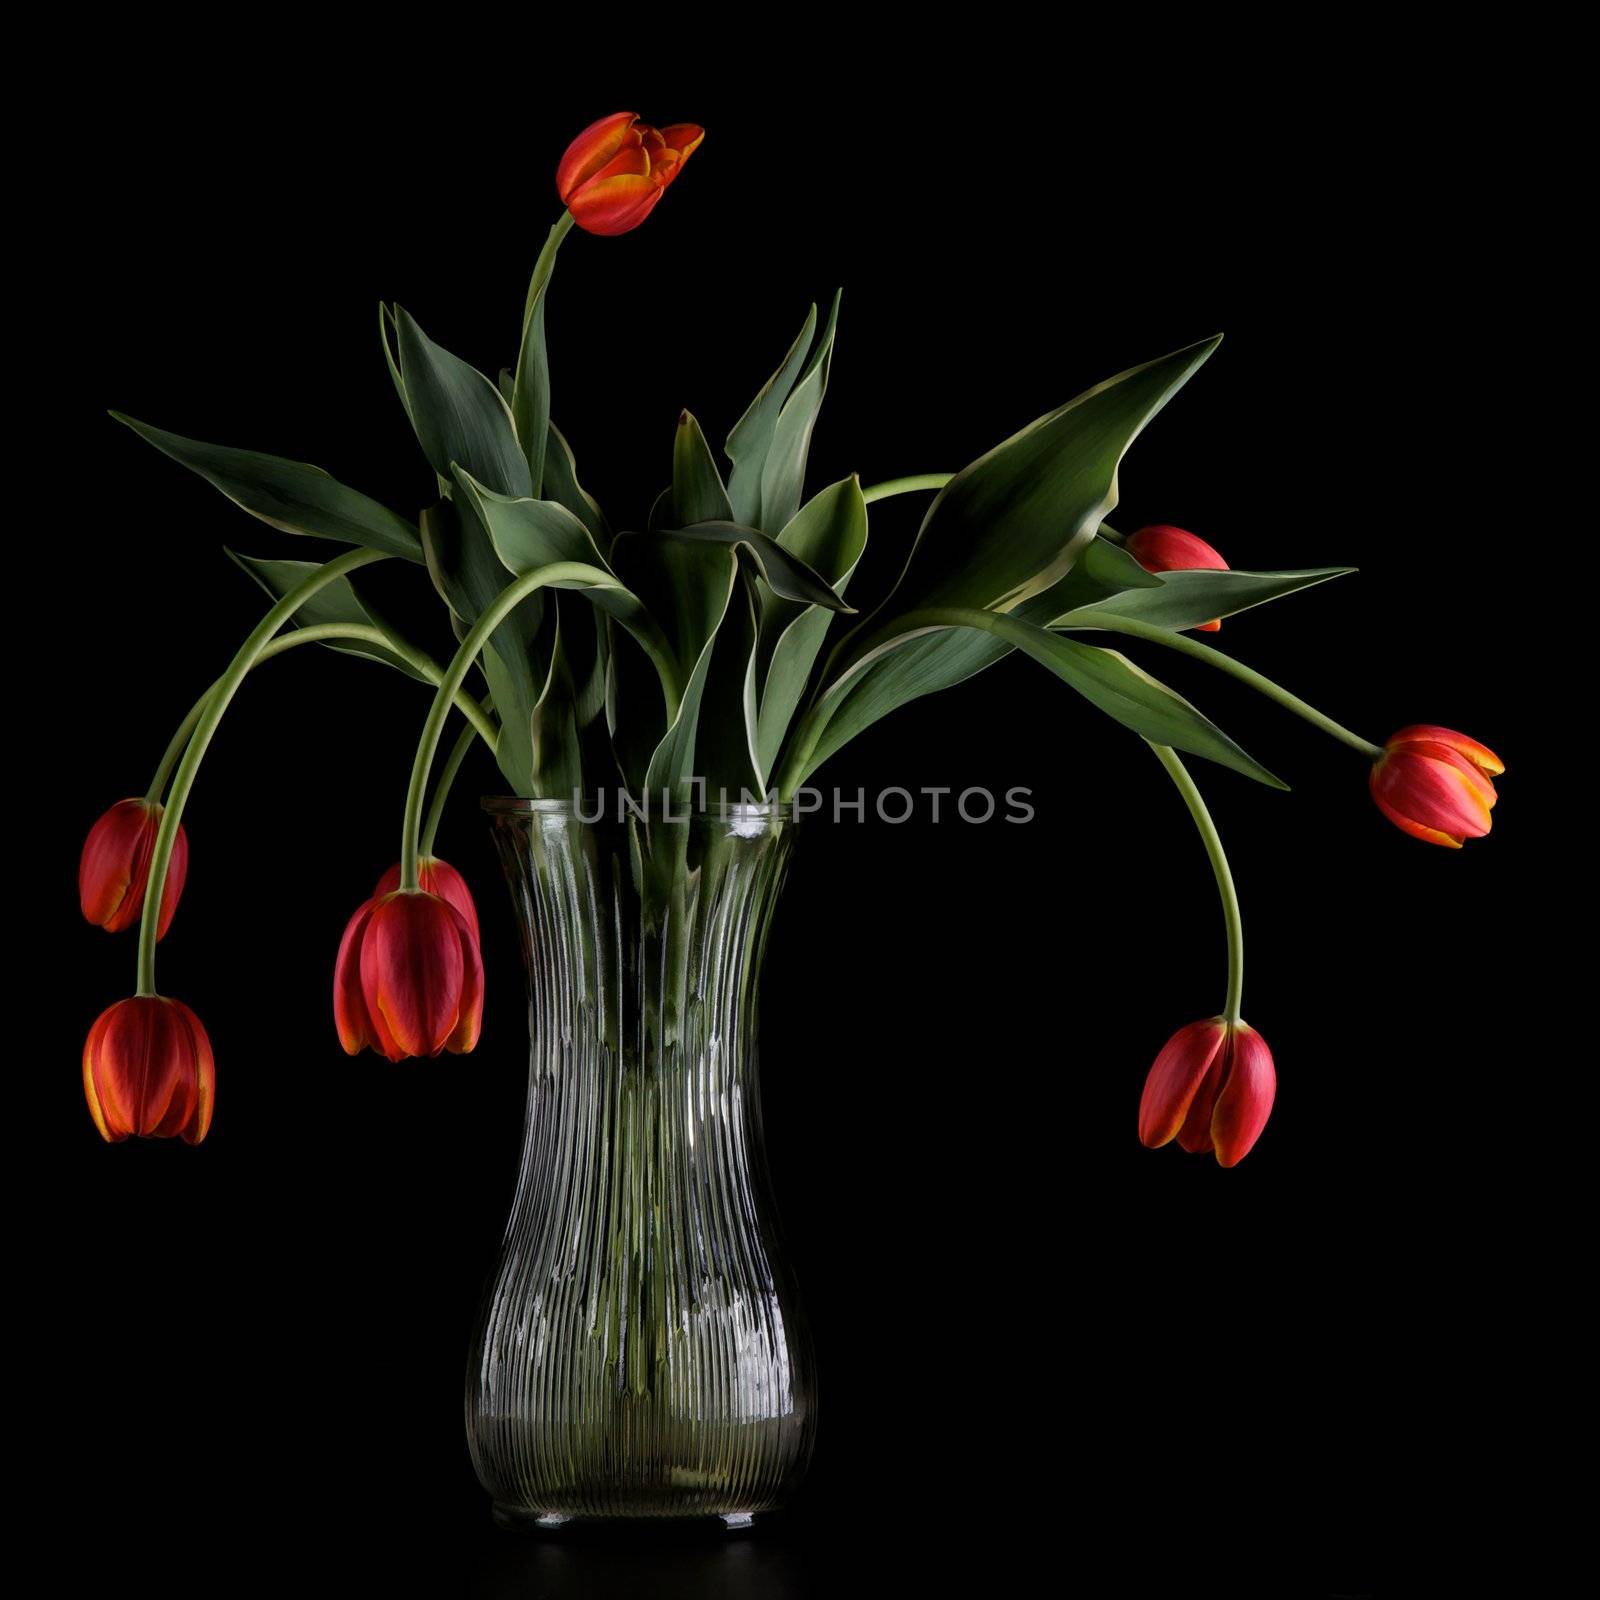 Wilting Tulips by ralanscott